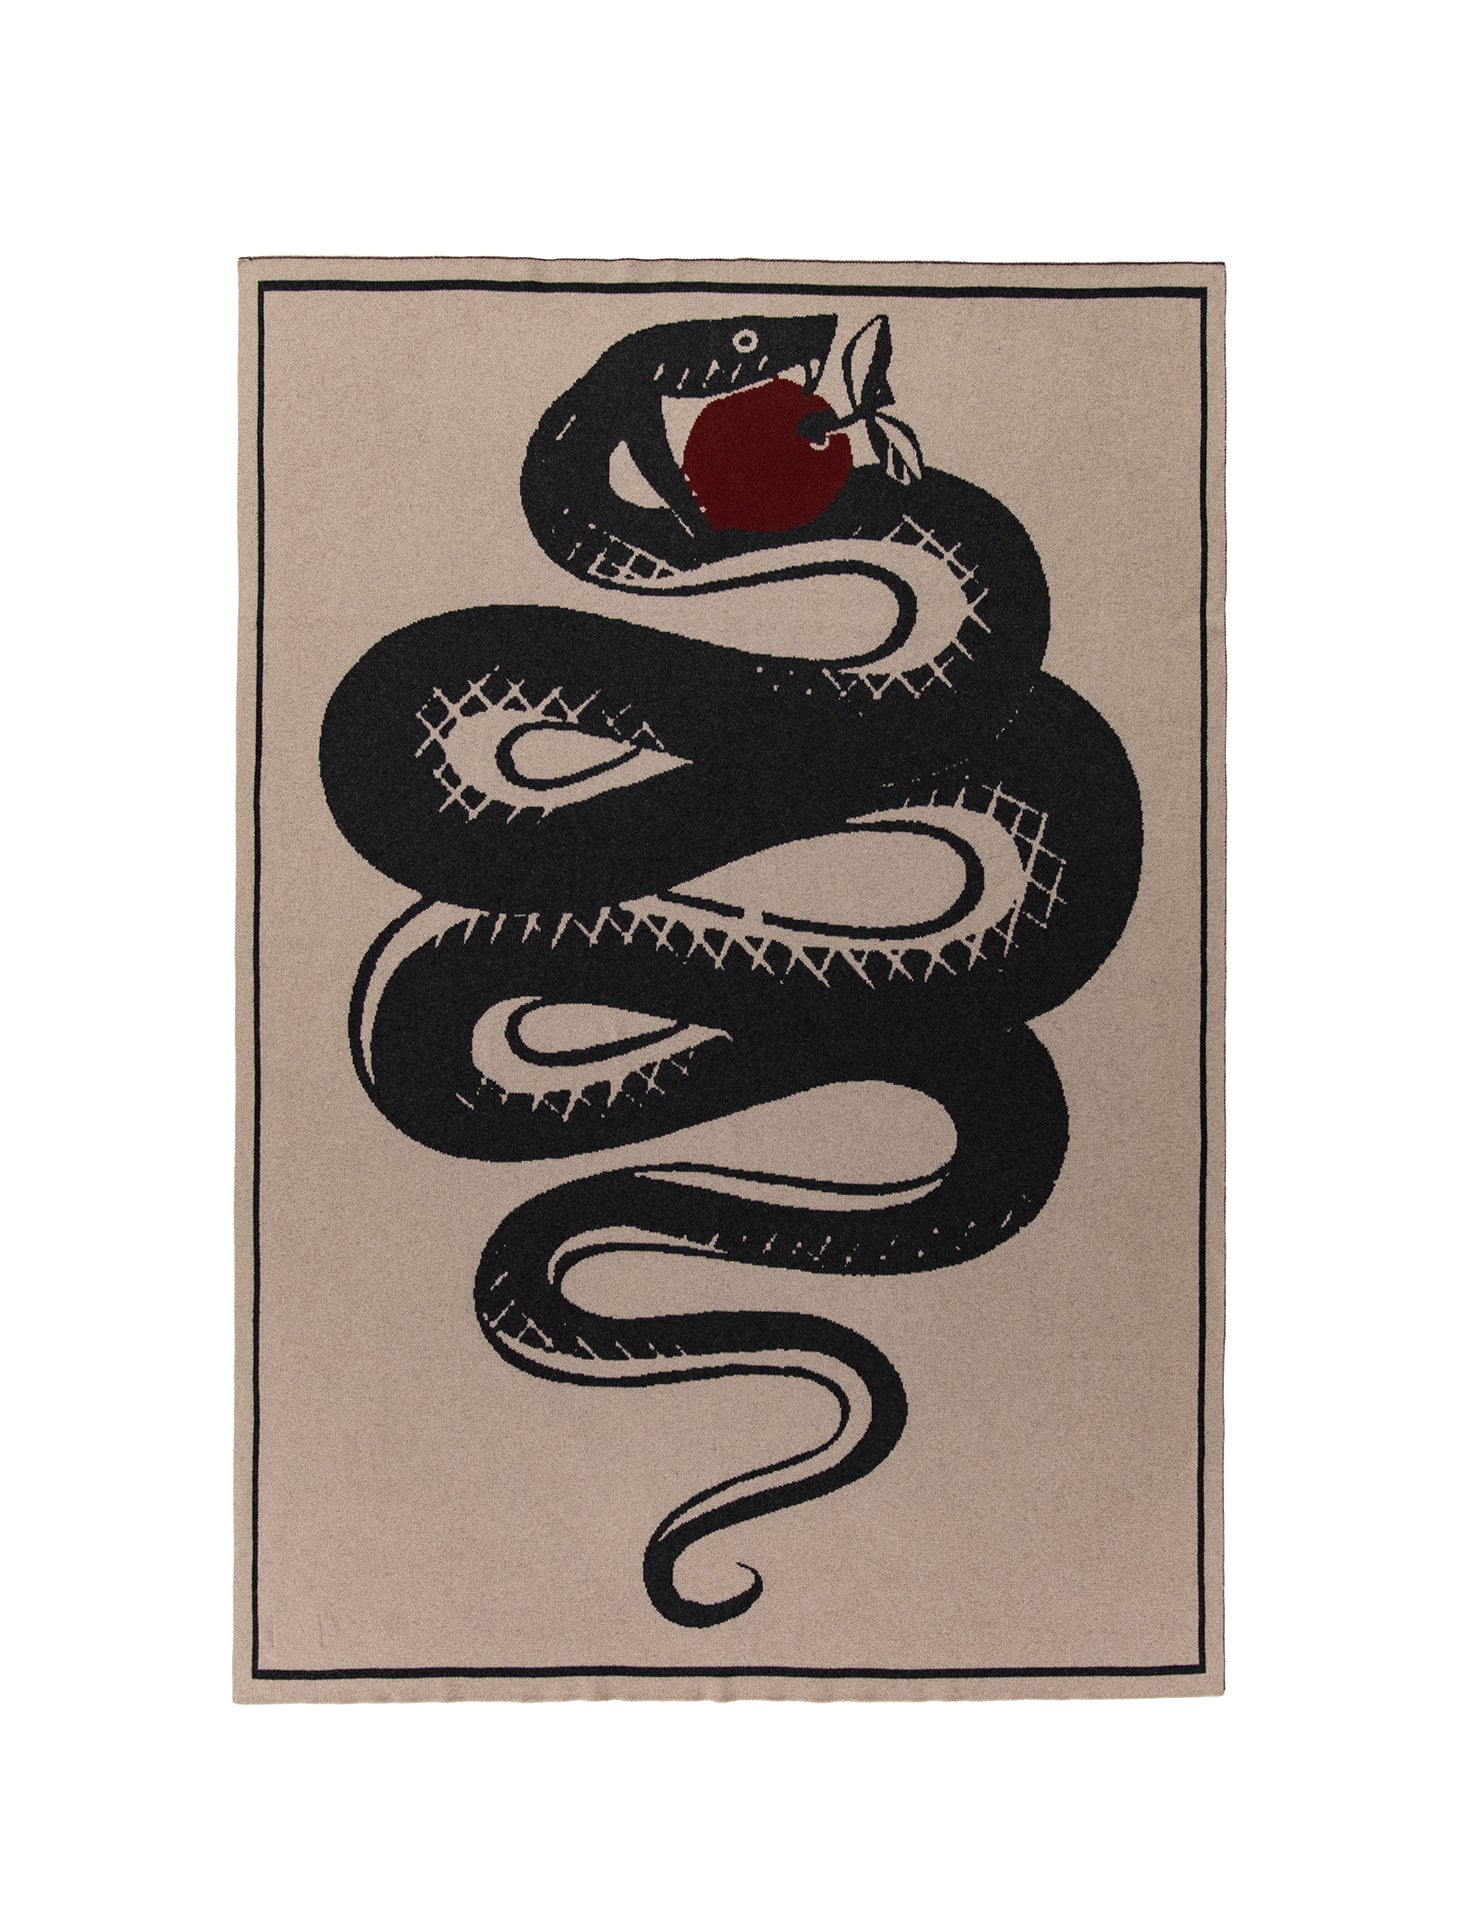 Serpent's Apple Throw